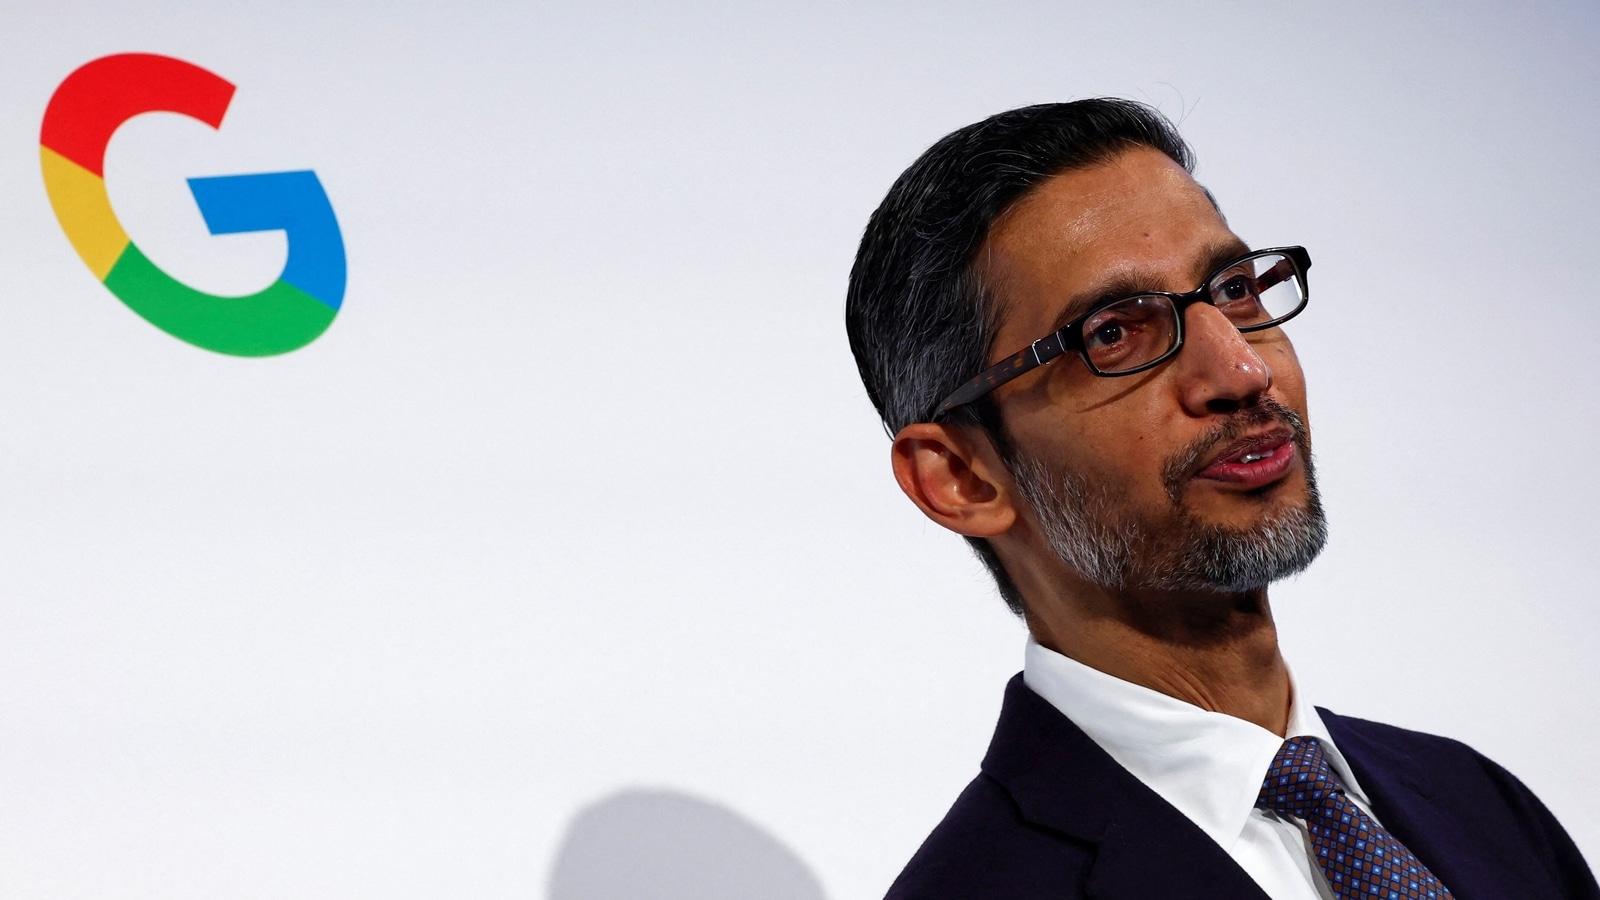 Sundar Pichai-led Google faces ‘Clear and Present Danger’ of falling shorter in AI